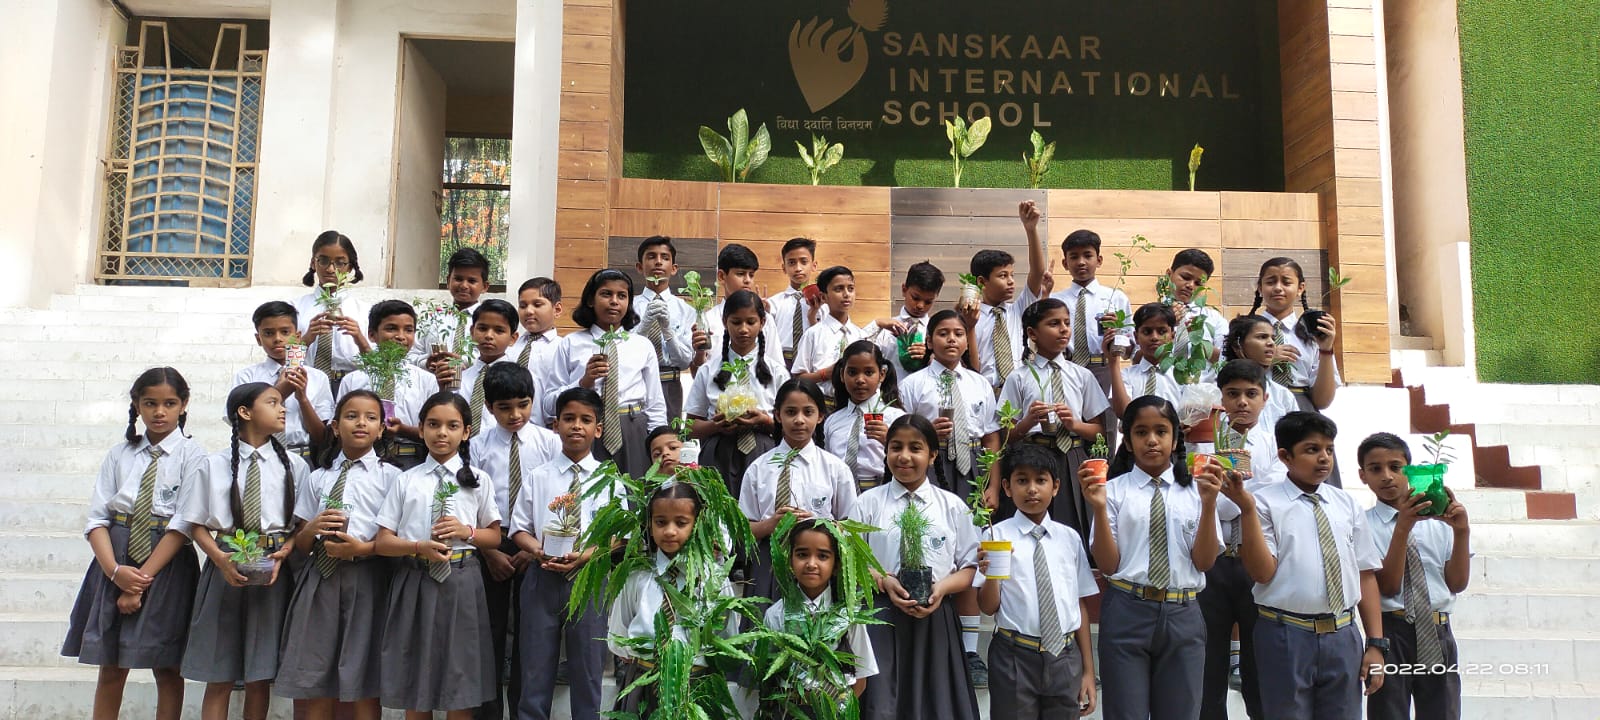 SANSKAAR INTERNATIONAL SCHOOL